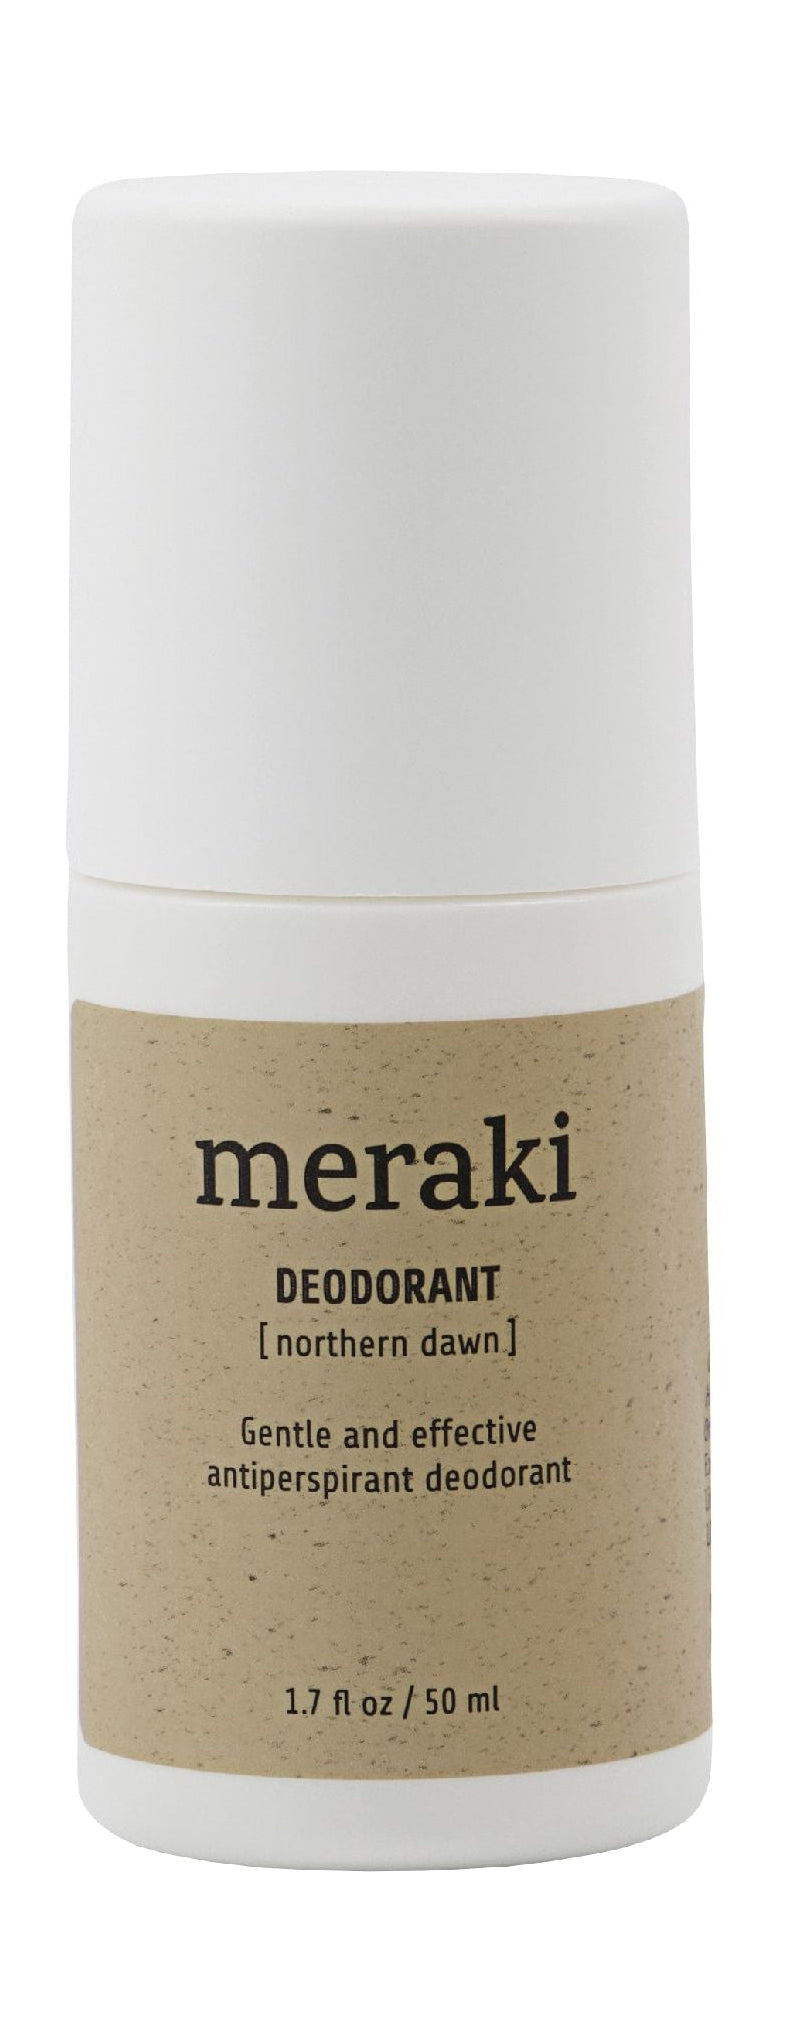 Desodorante de Meraki 50 ml, Northern Dawn